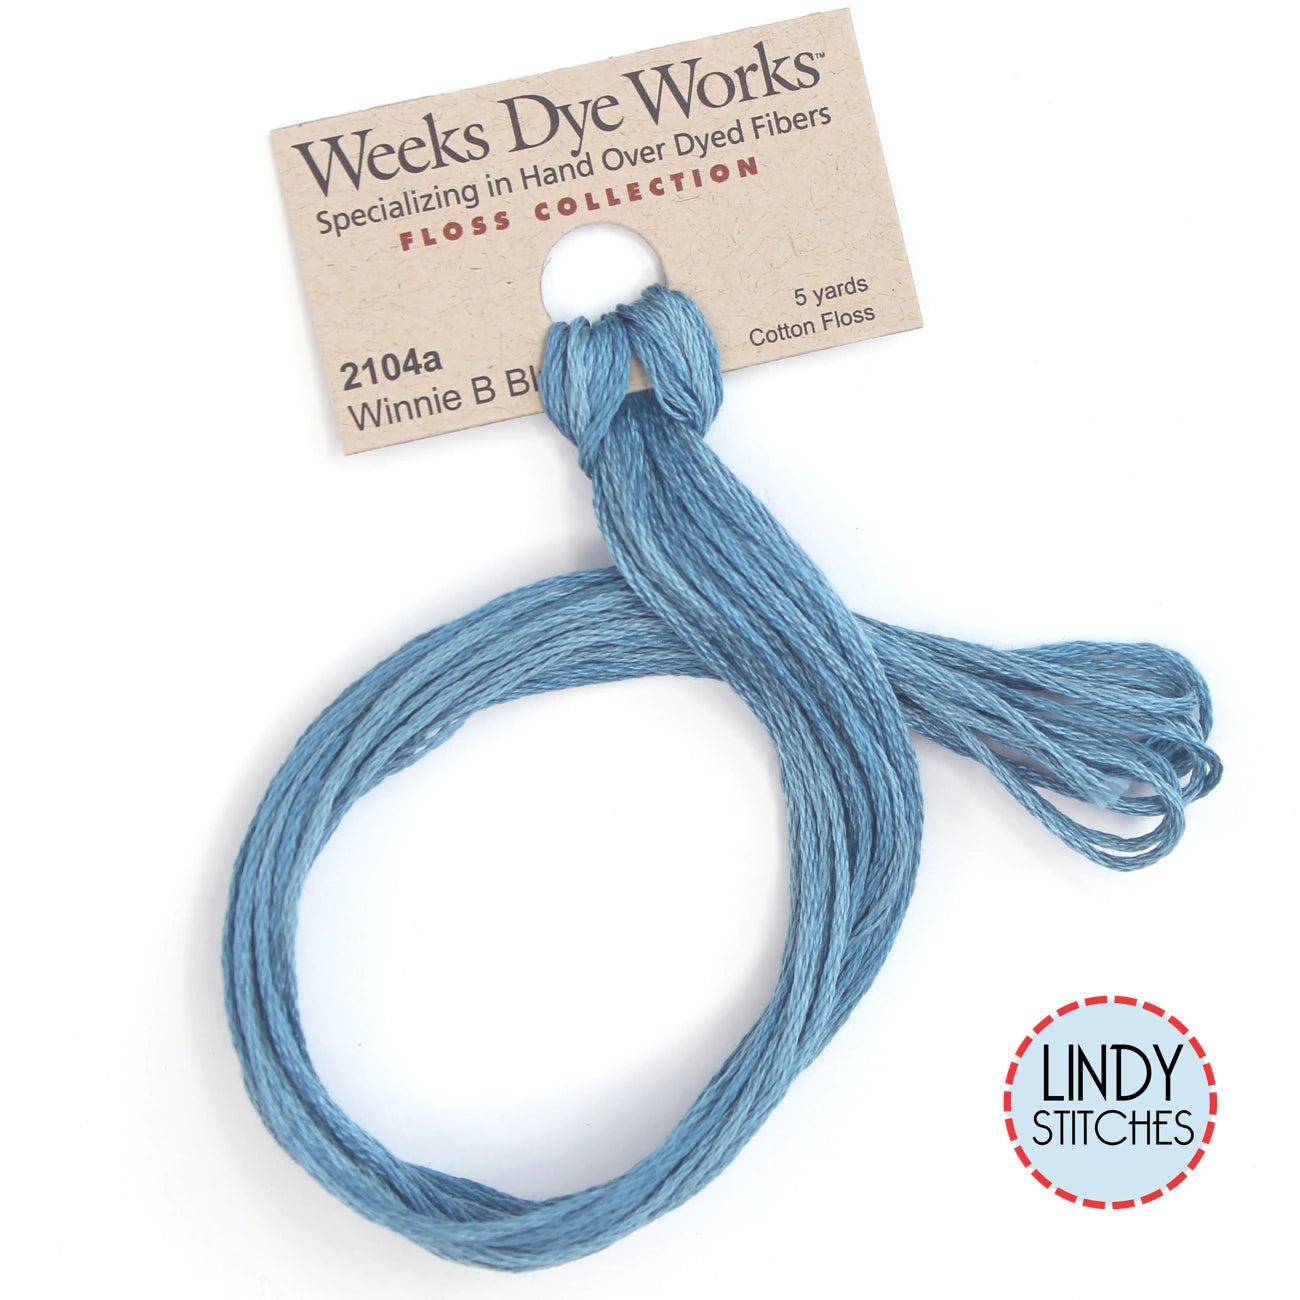 Winne B Blue Weeks Dye Works Floss Hand Dyed Cotton Skein 2104a